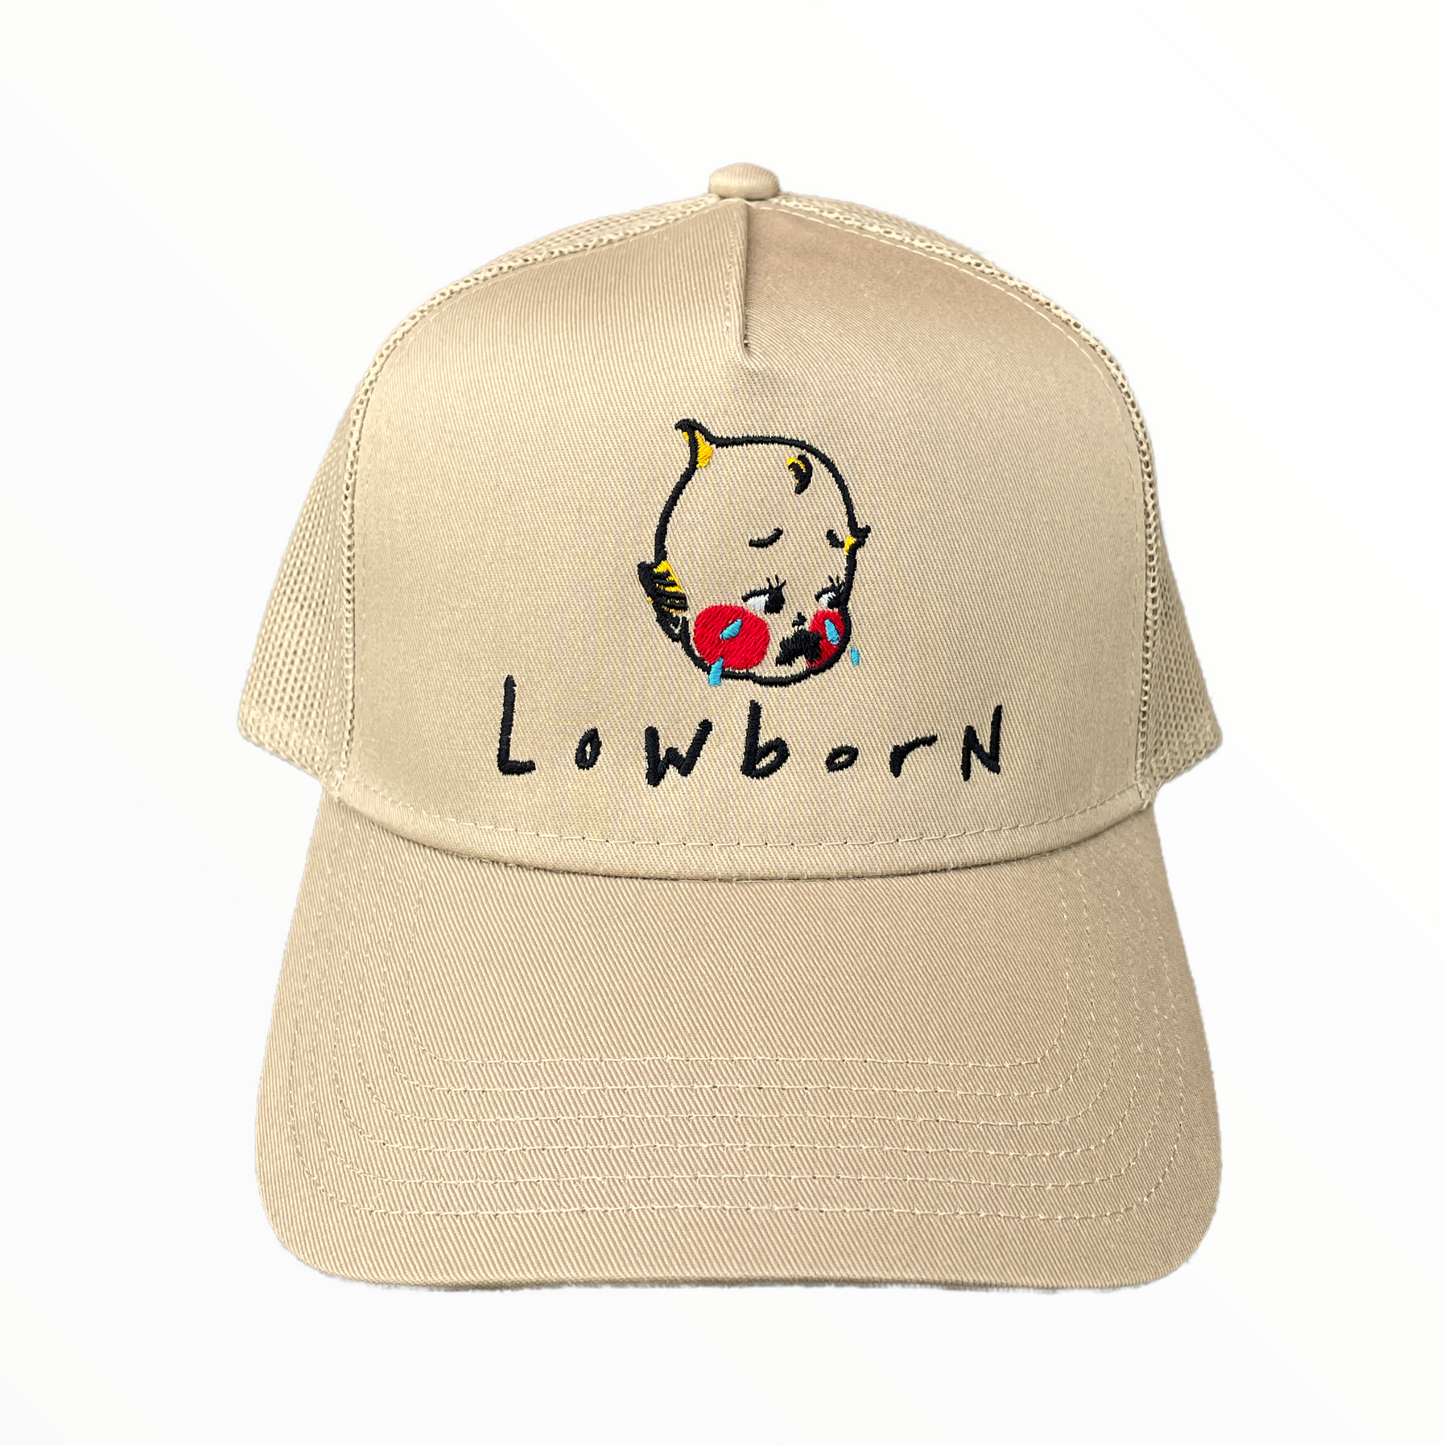 LOWBORN Crybaby Trucker Cap